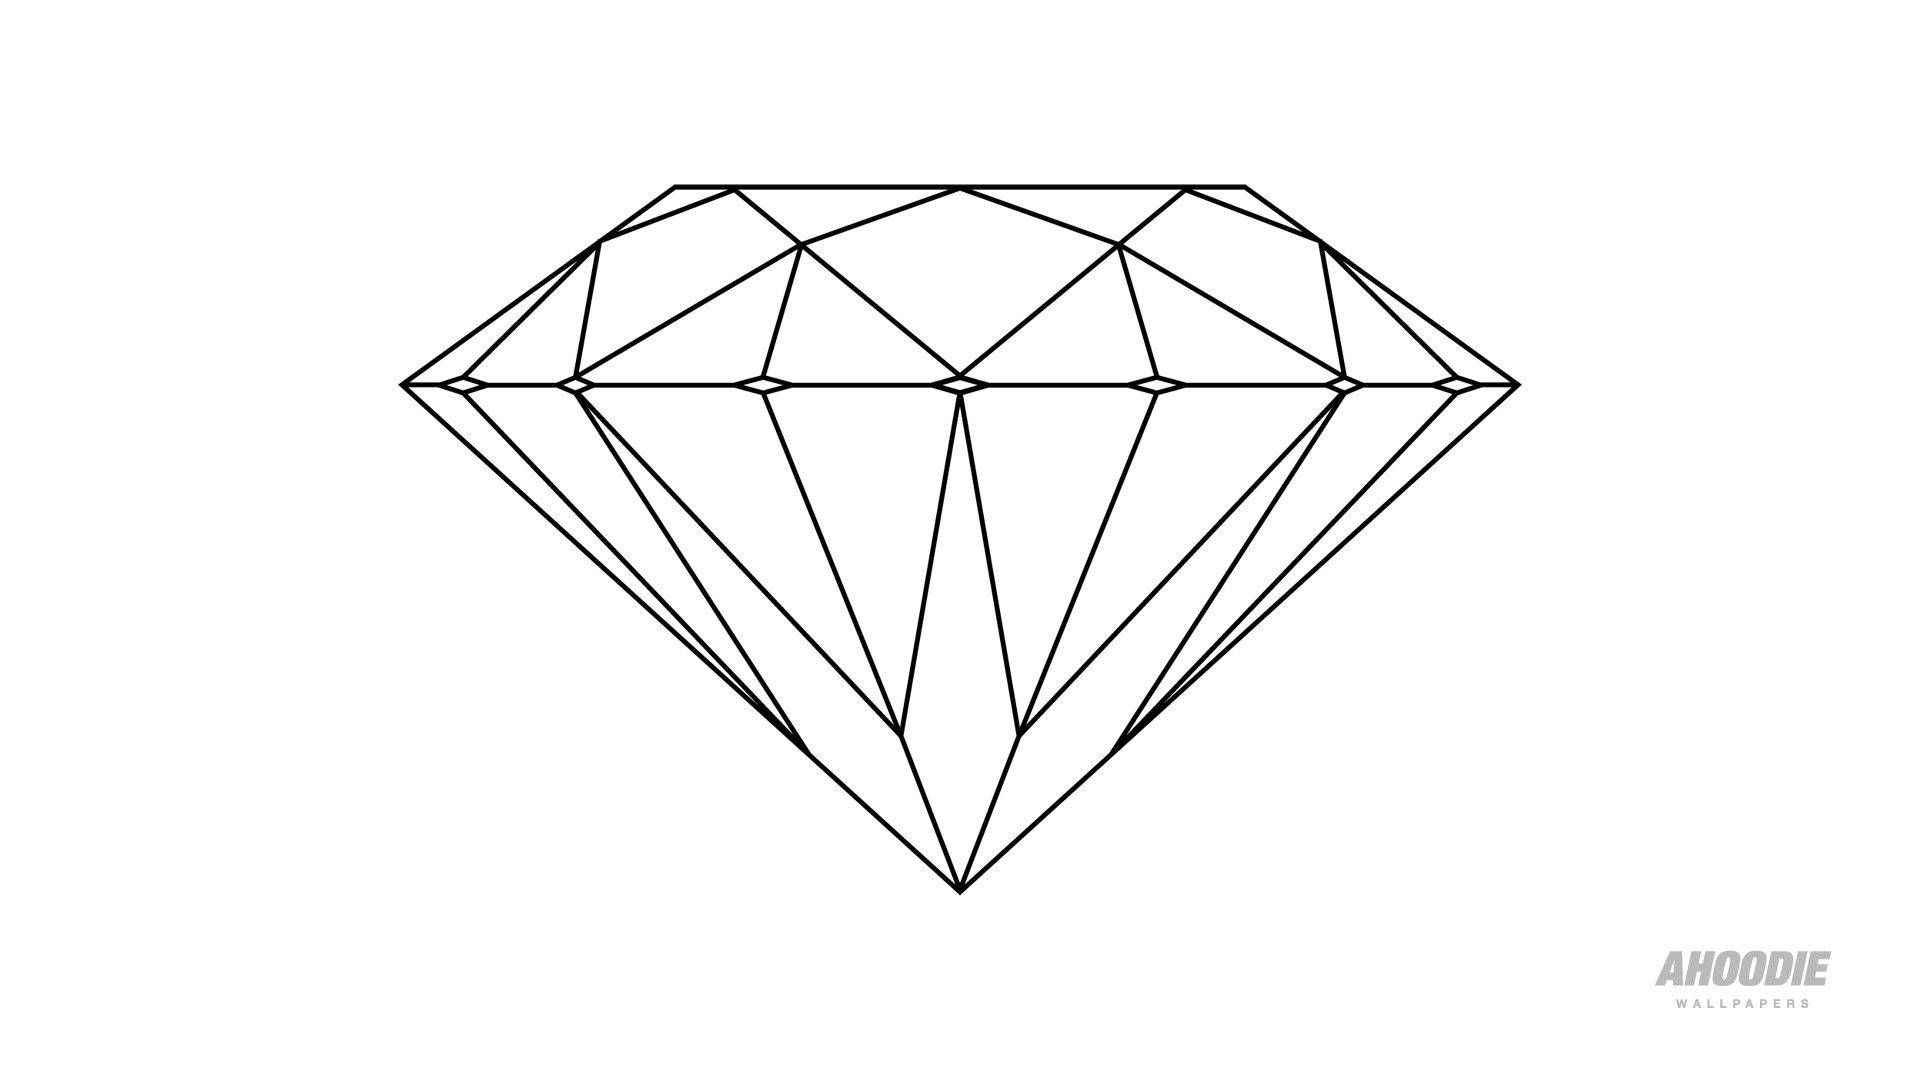 Diamond Supply Company Wiki Wallpapers